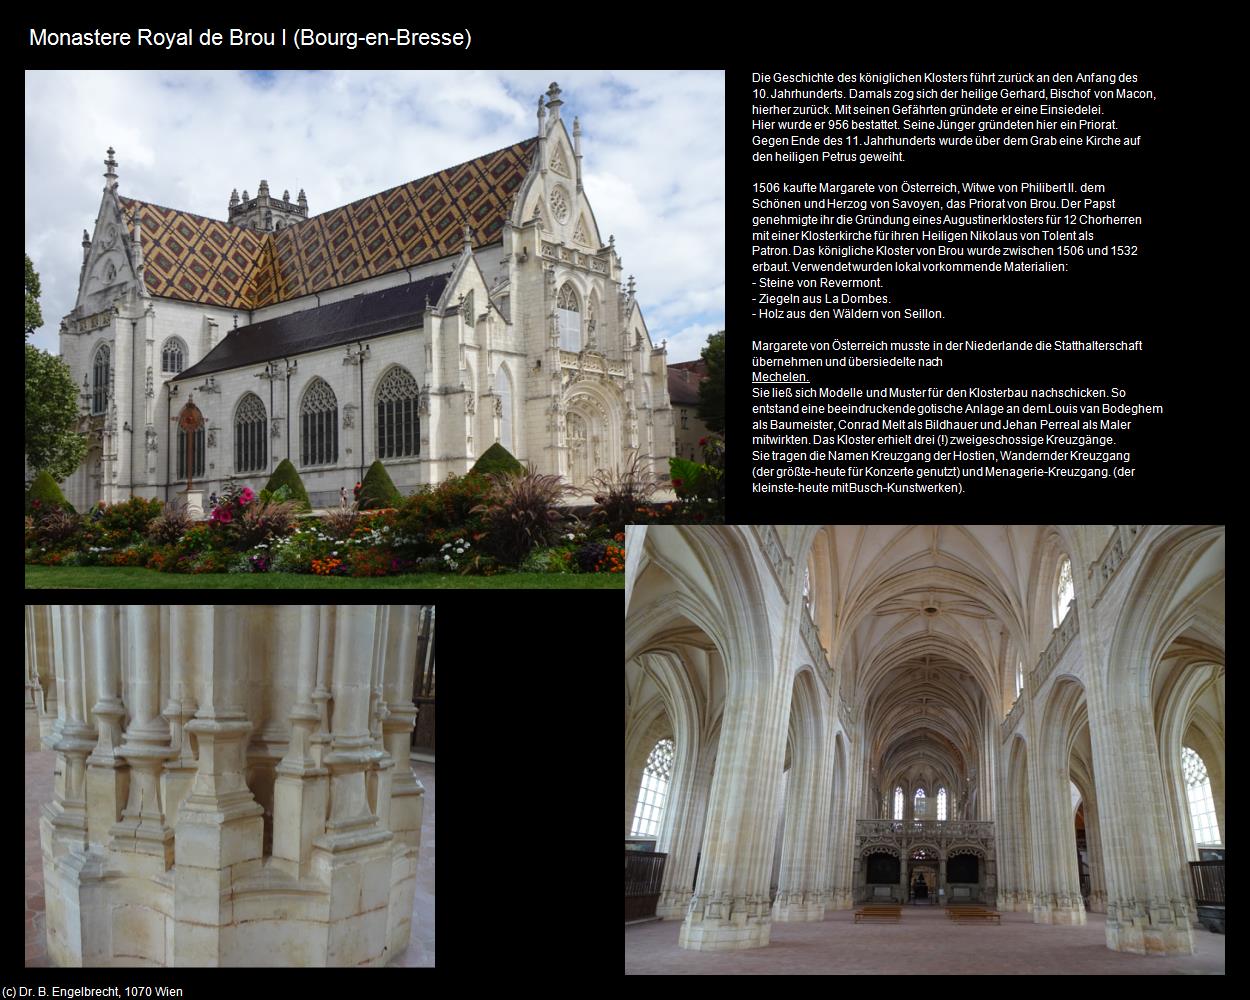 Monastere Royal de Brou I (Bourg-en-Bresse (FR-ARA)) in Kulturatlas-FRANKREICH(c)B.Engelbrecht